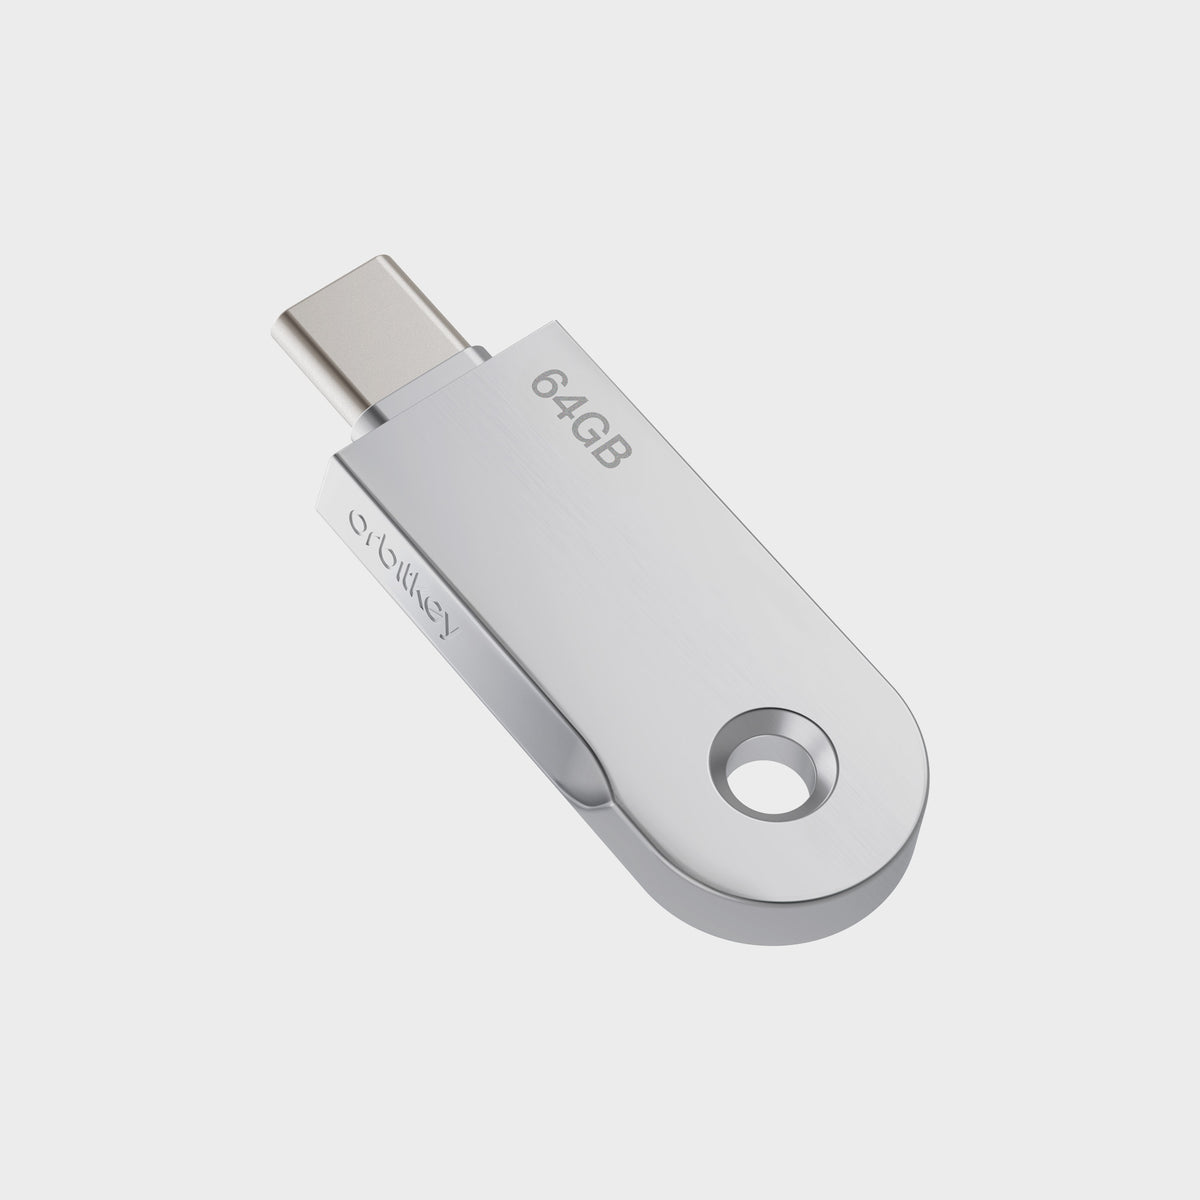 Loop Keychain for custom printed usb drives.